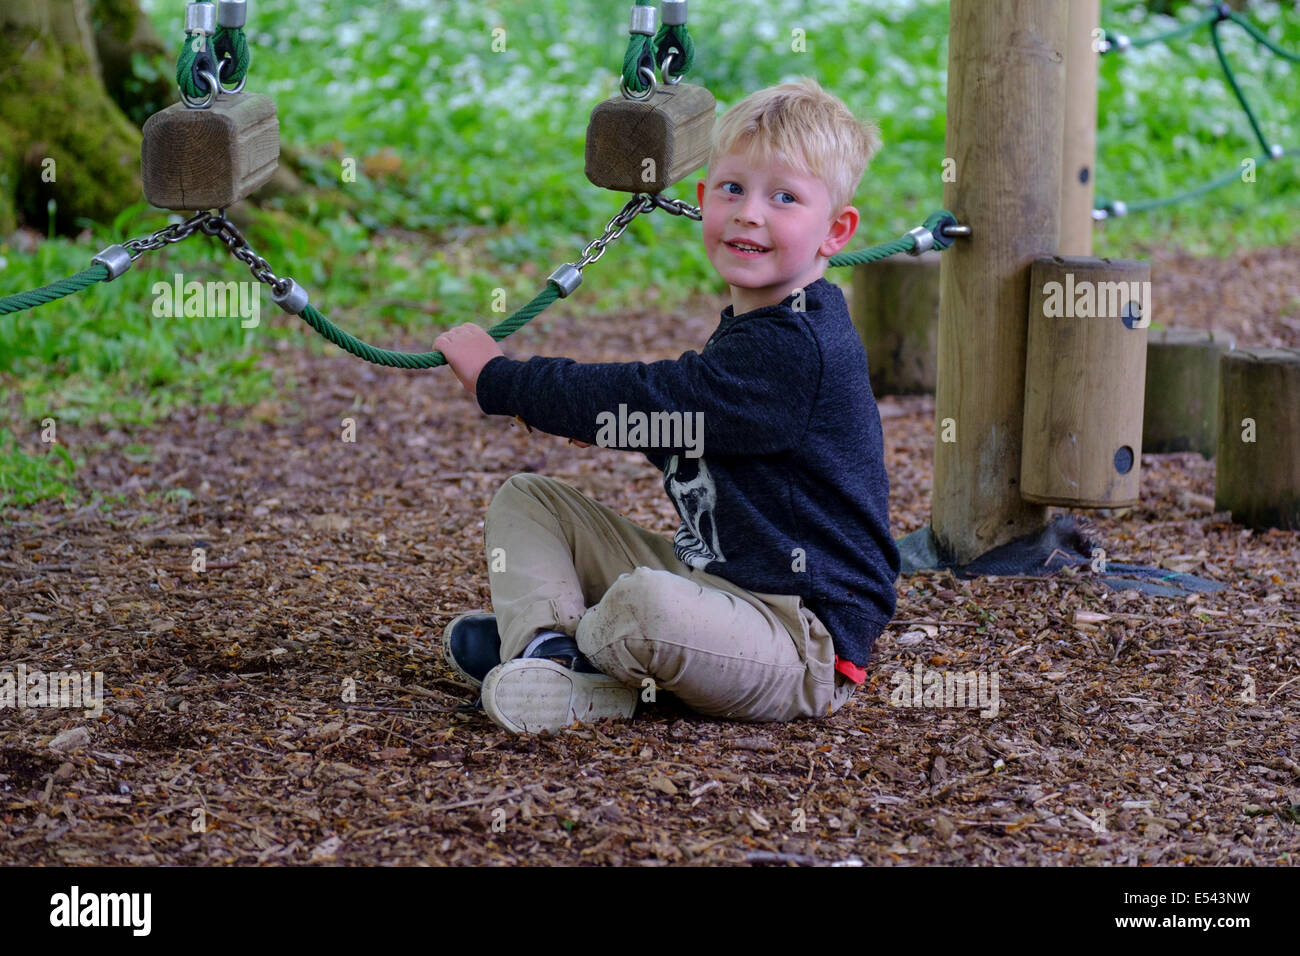 Blonde boy playing on adventure playground Stock Photo